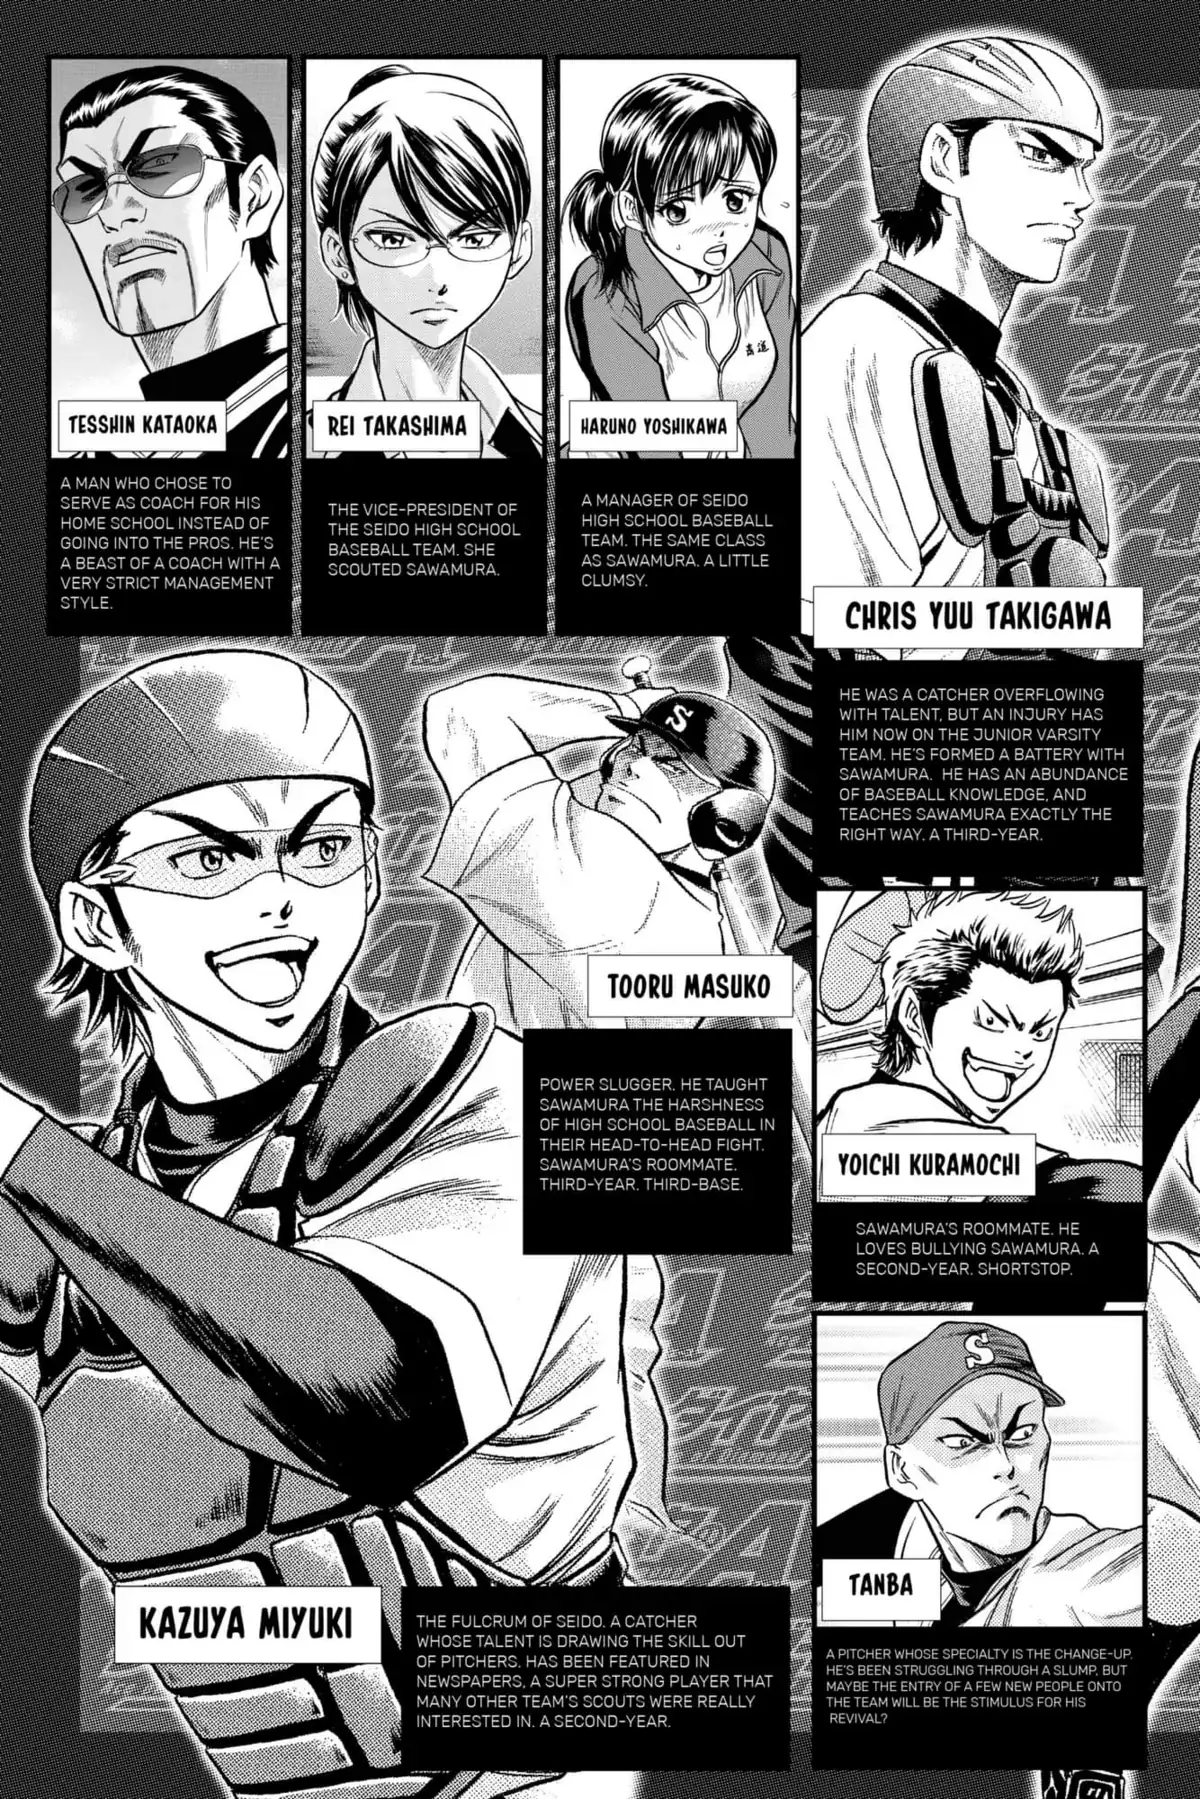 ACE OF DIAMOND act II Vol. 29 Yuji Terajima Japanese Baseball Shonen Comic  Manga